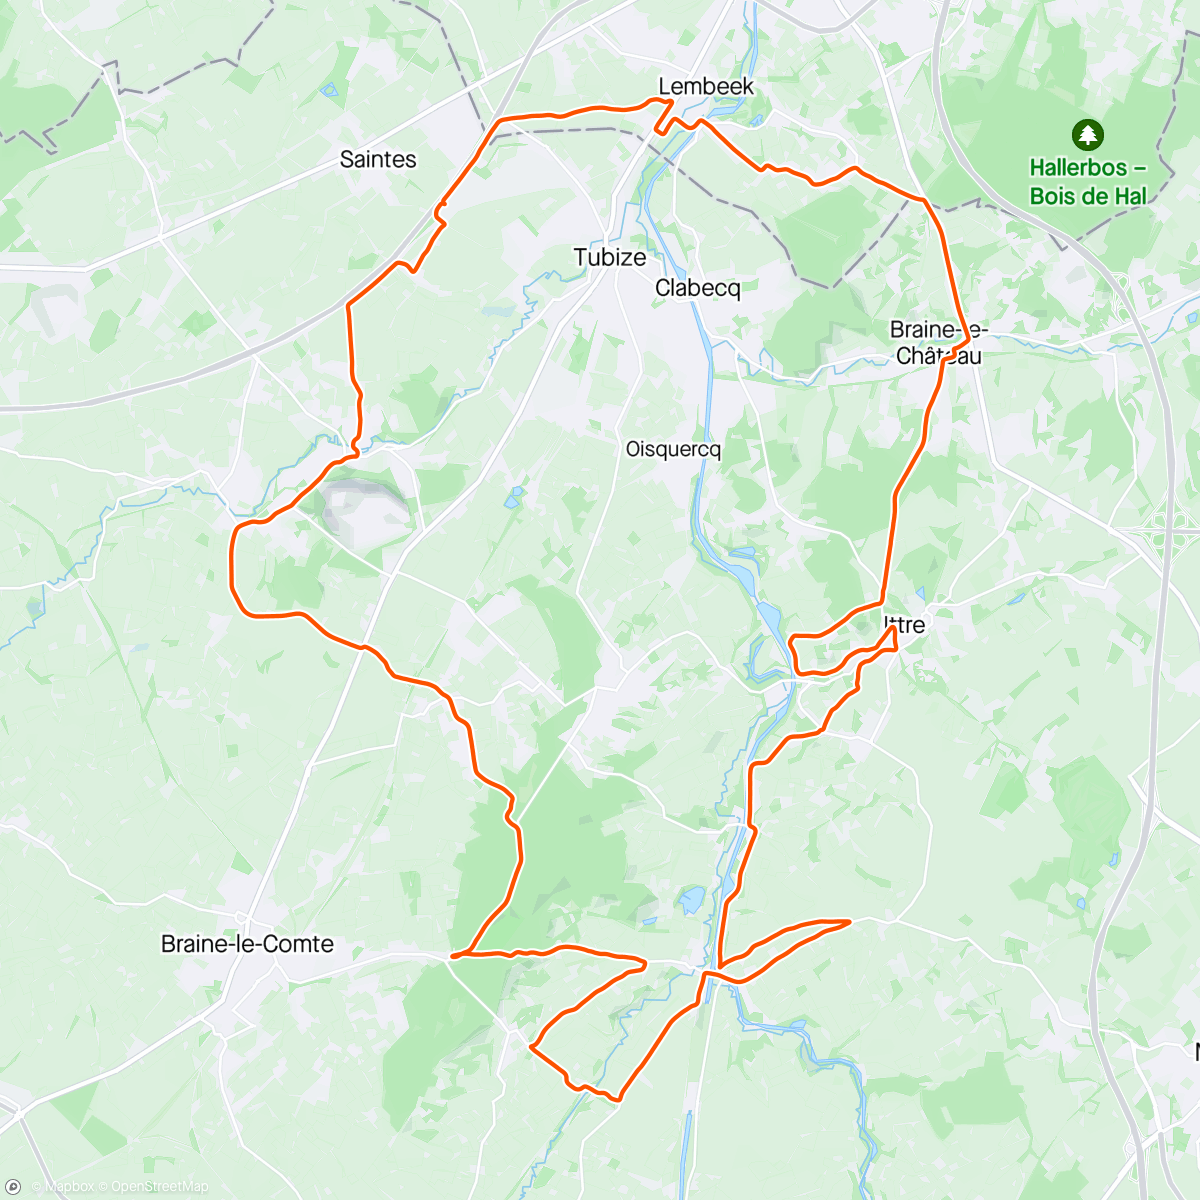 Map of the activity, Namiddagrit Ittre - Ronquières